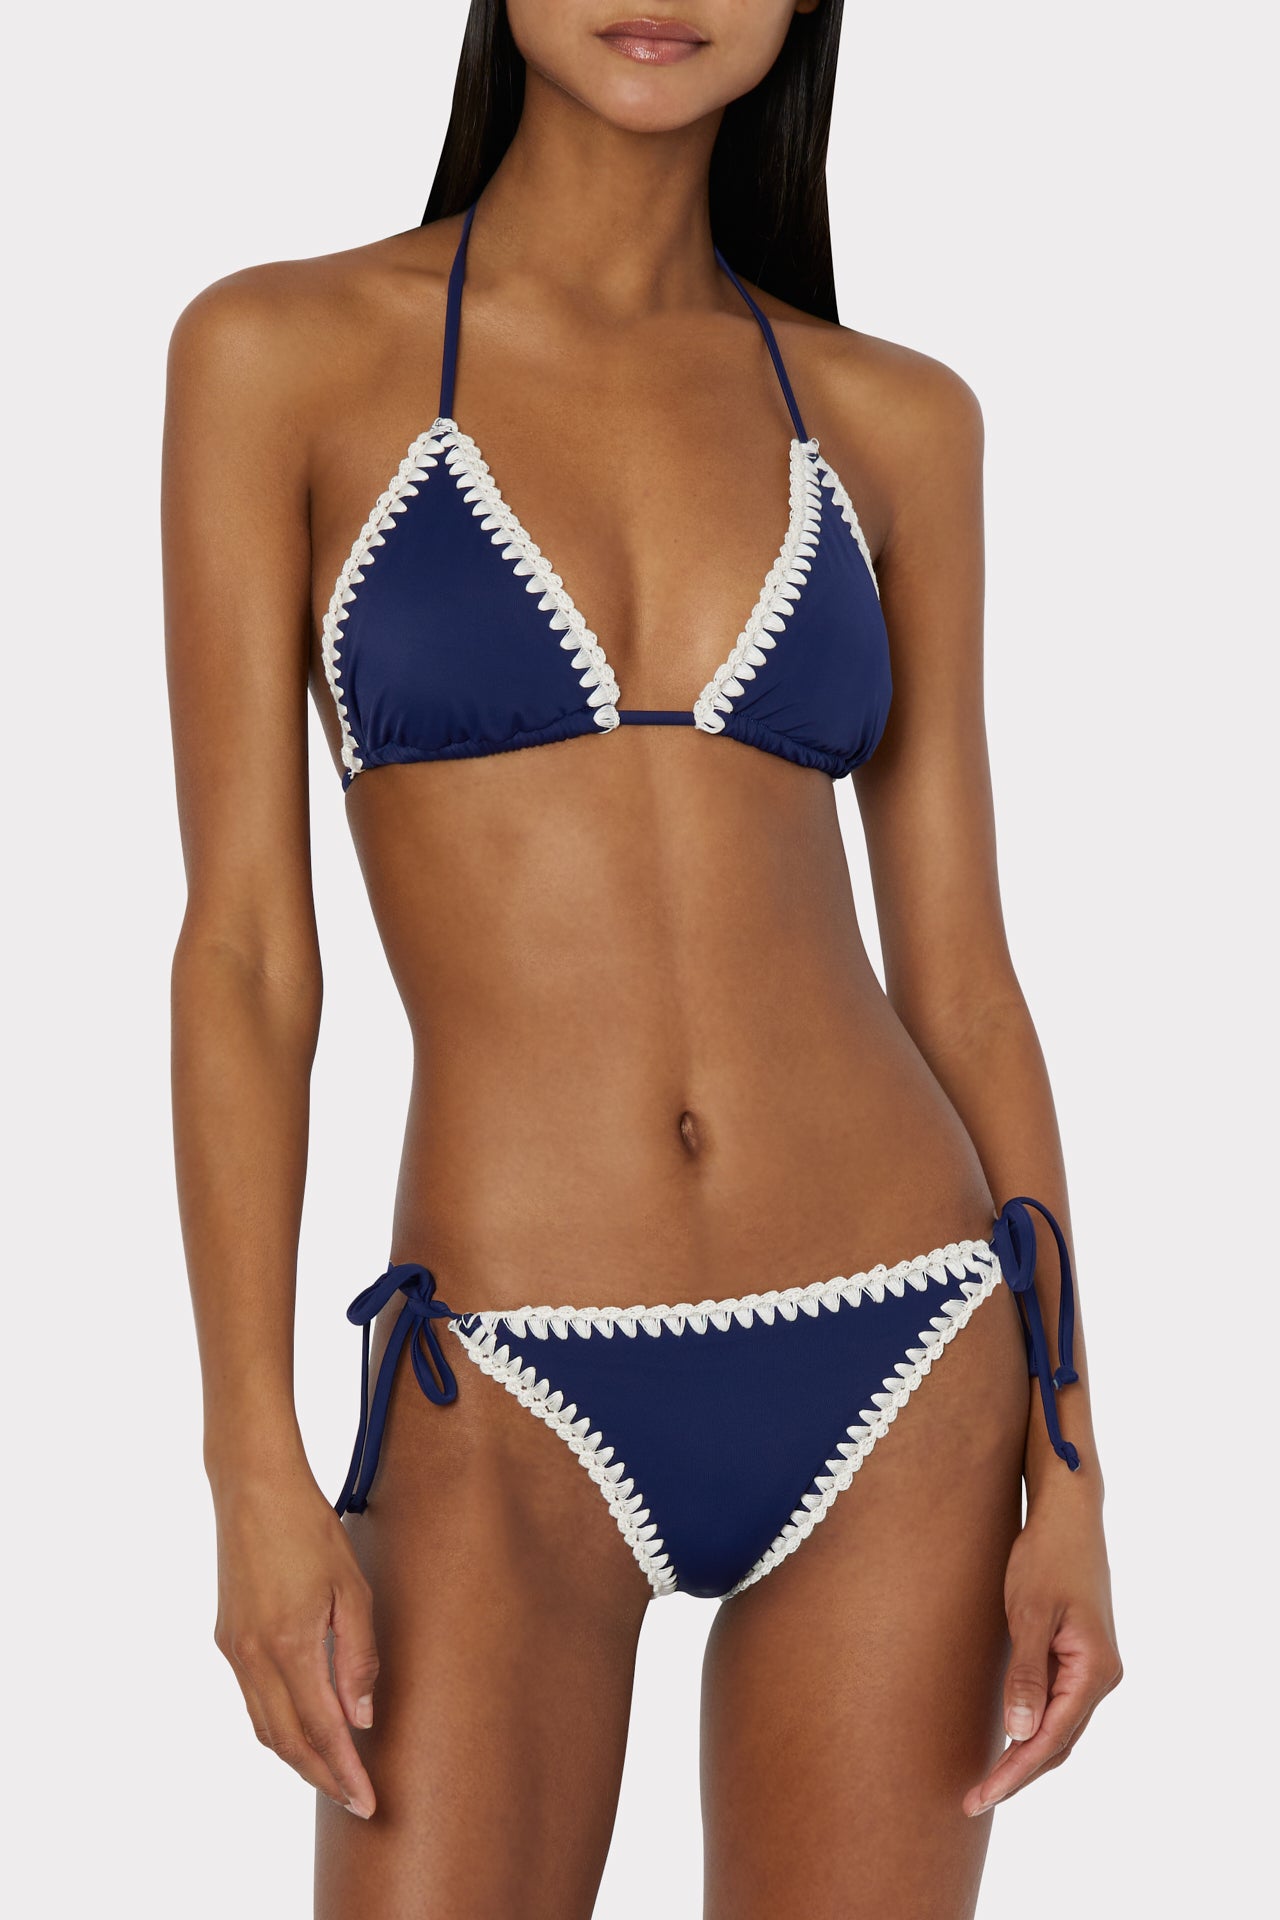 Oceanien etik skelet Women's Navy Blue Bikini Top | MILLY